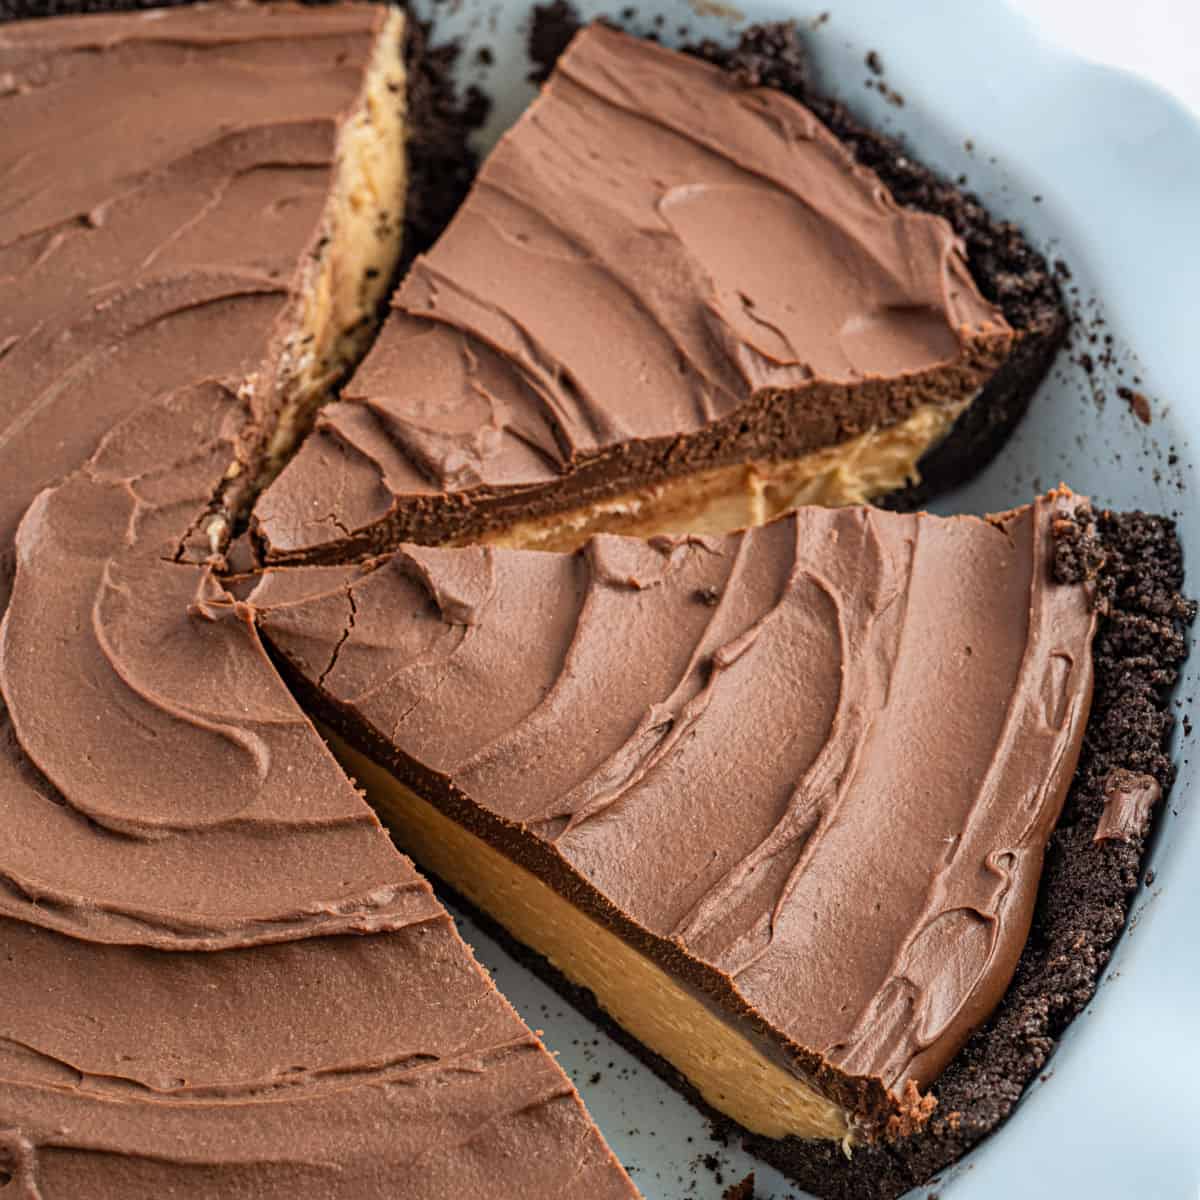 No Bake Peanut Butter Pie Recipe - Make Your Meals